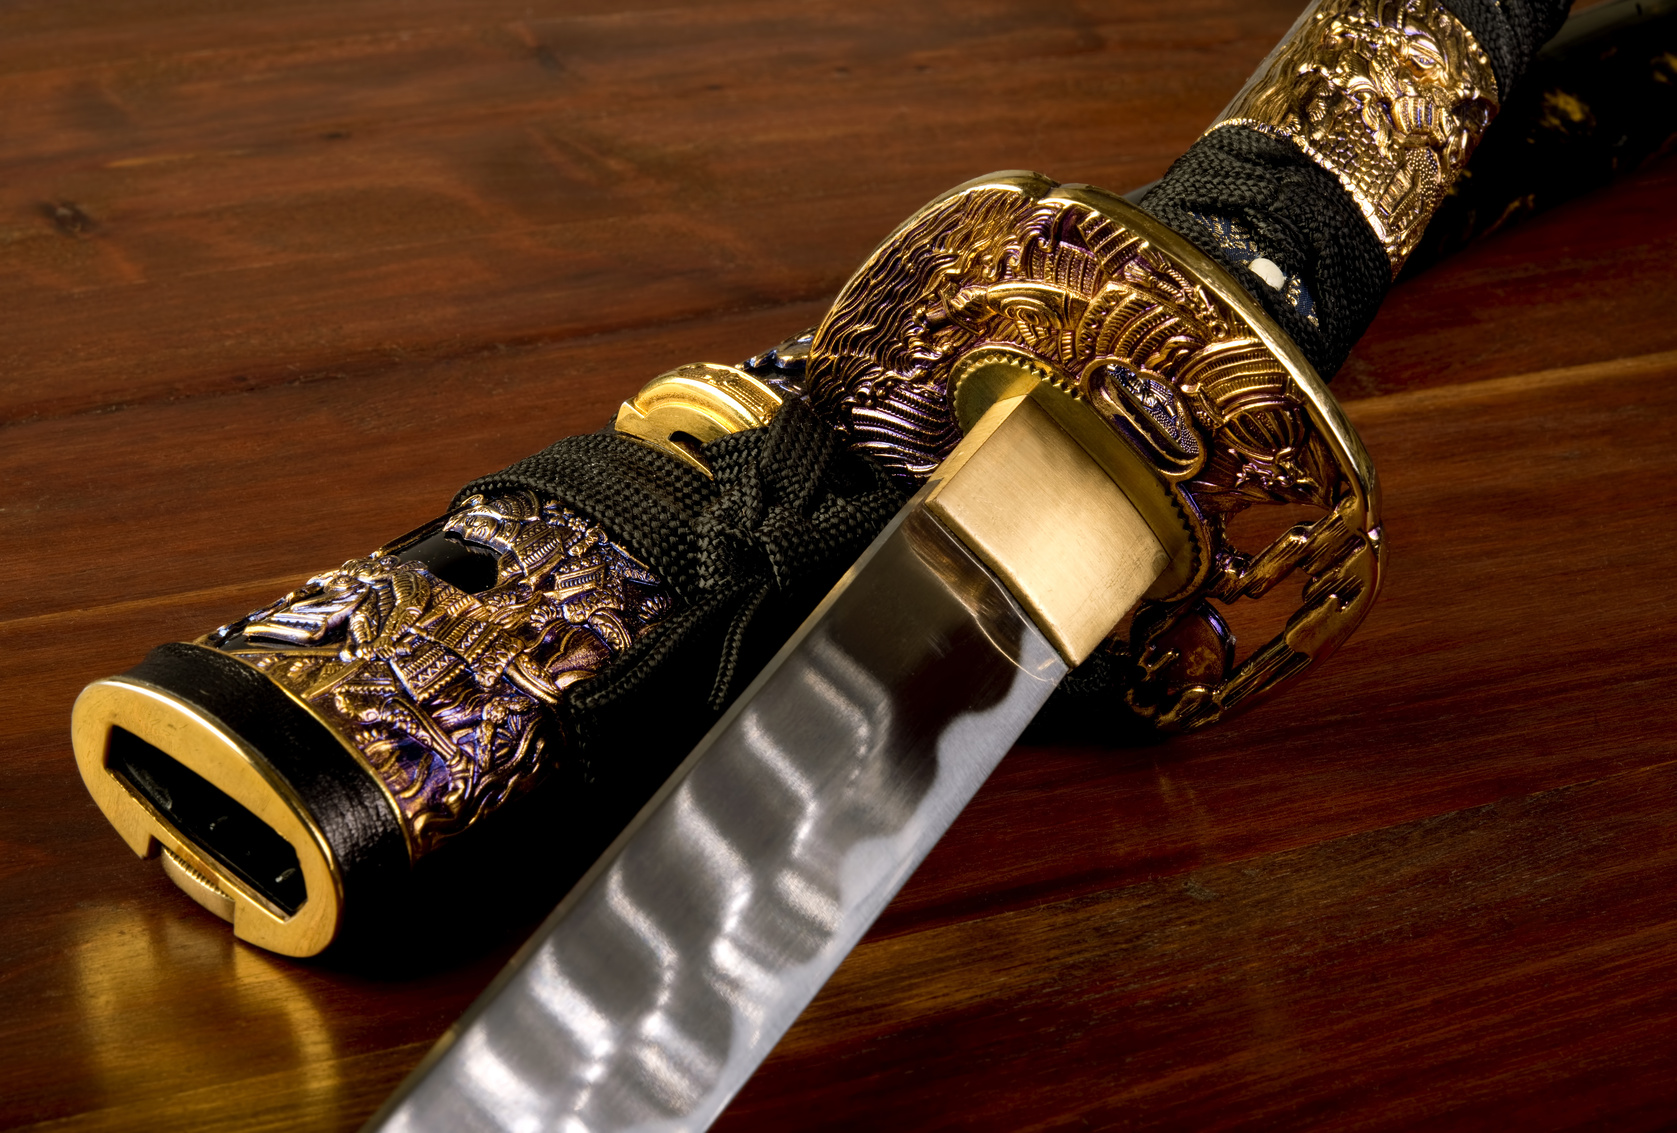 Ornate Japanese Samurai sword.